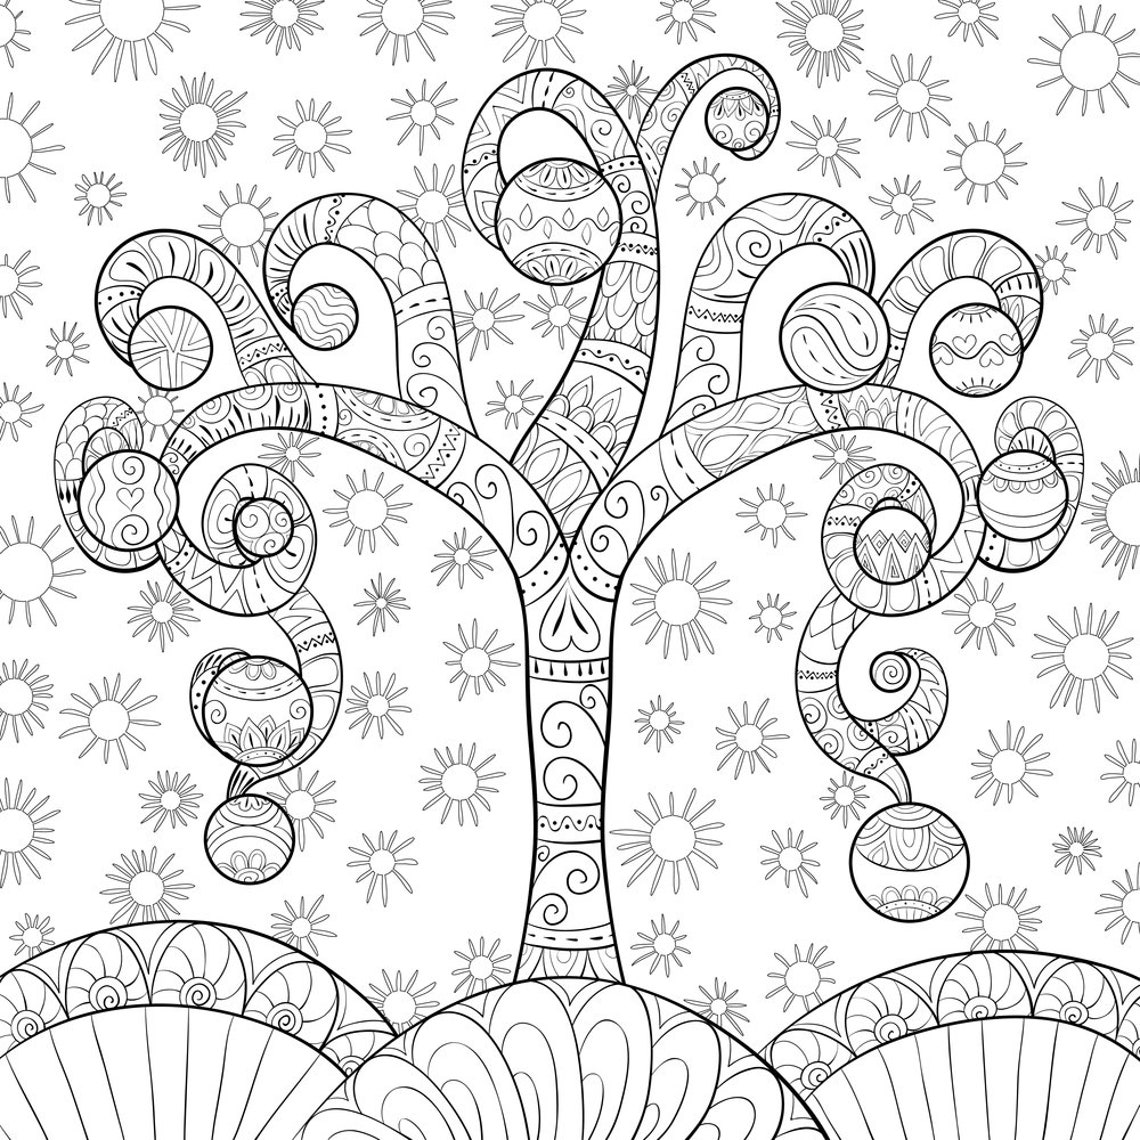 Joy of Christmas Mandala Coloring Book 71 Pages Digital Download - Etsy